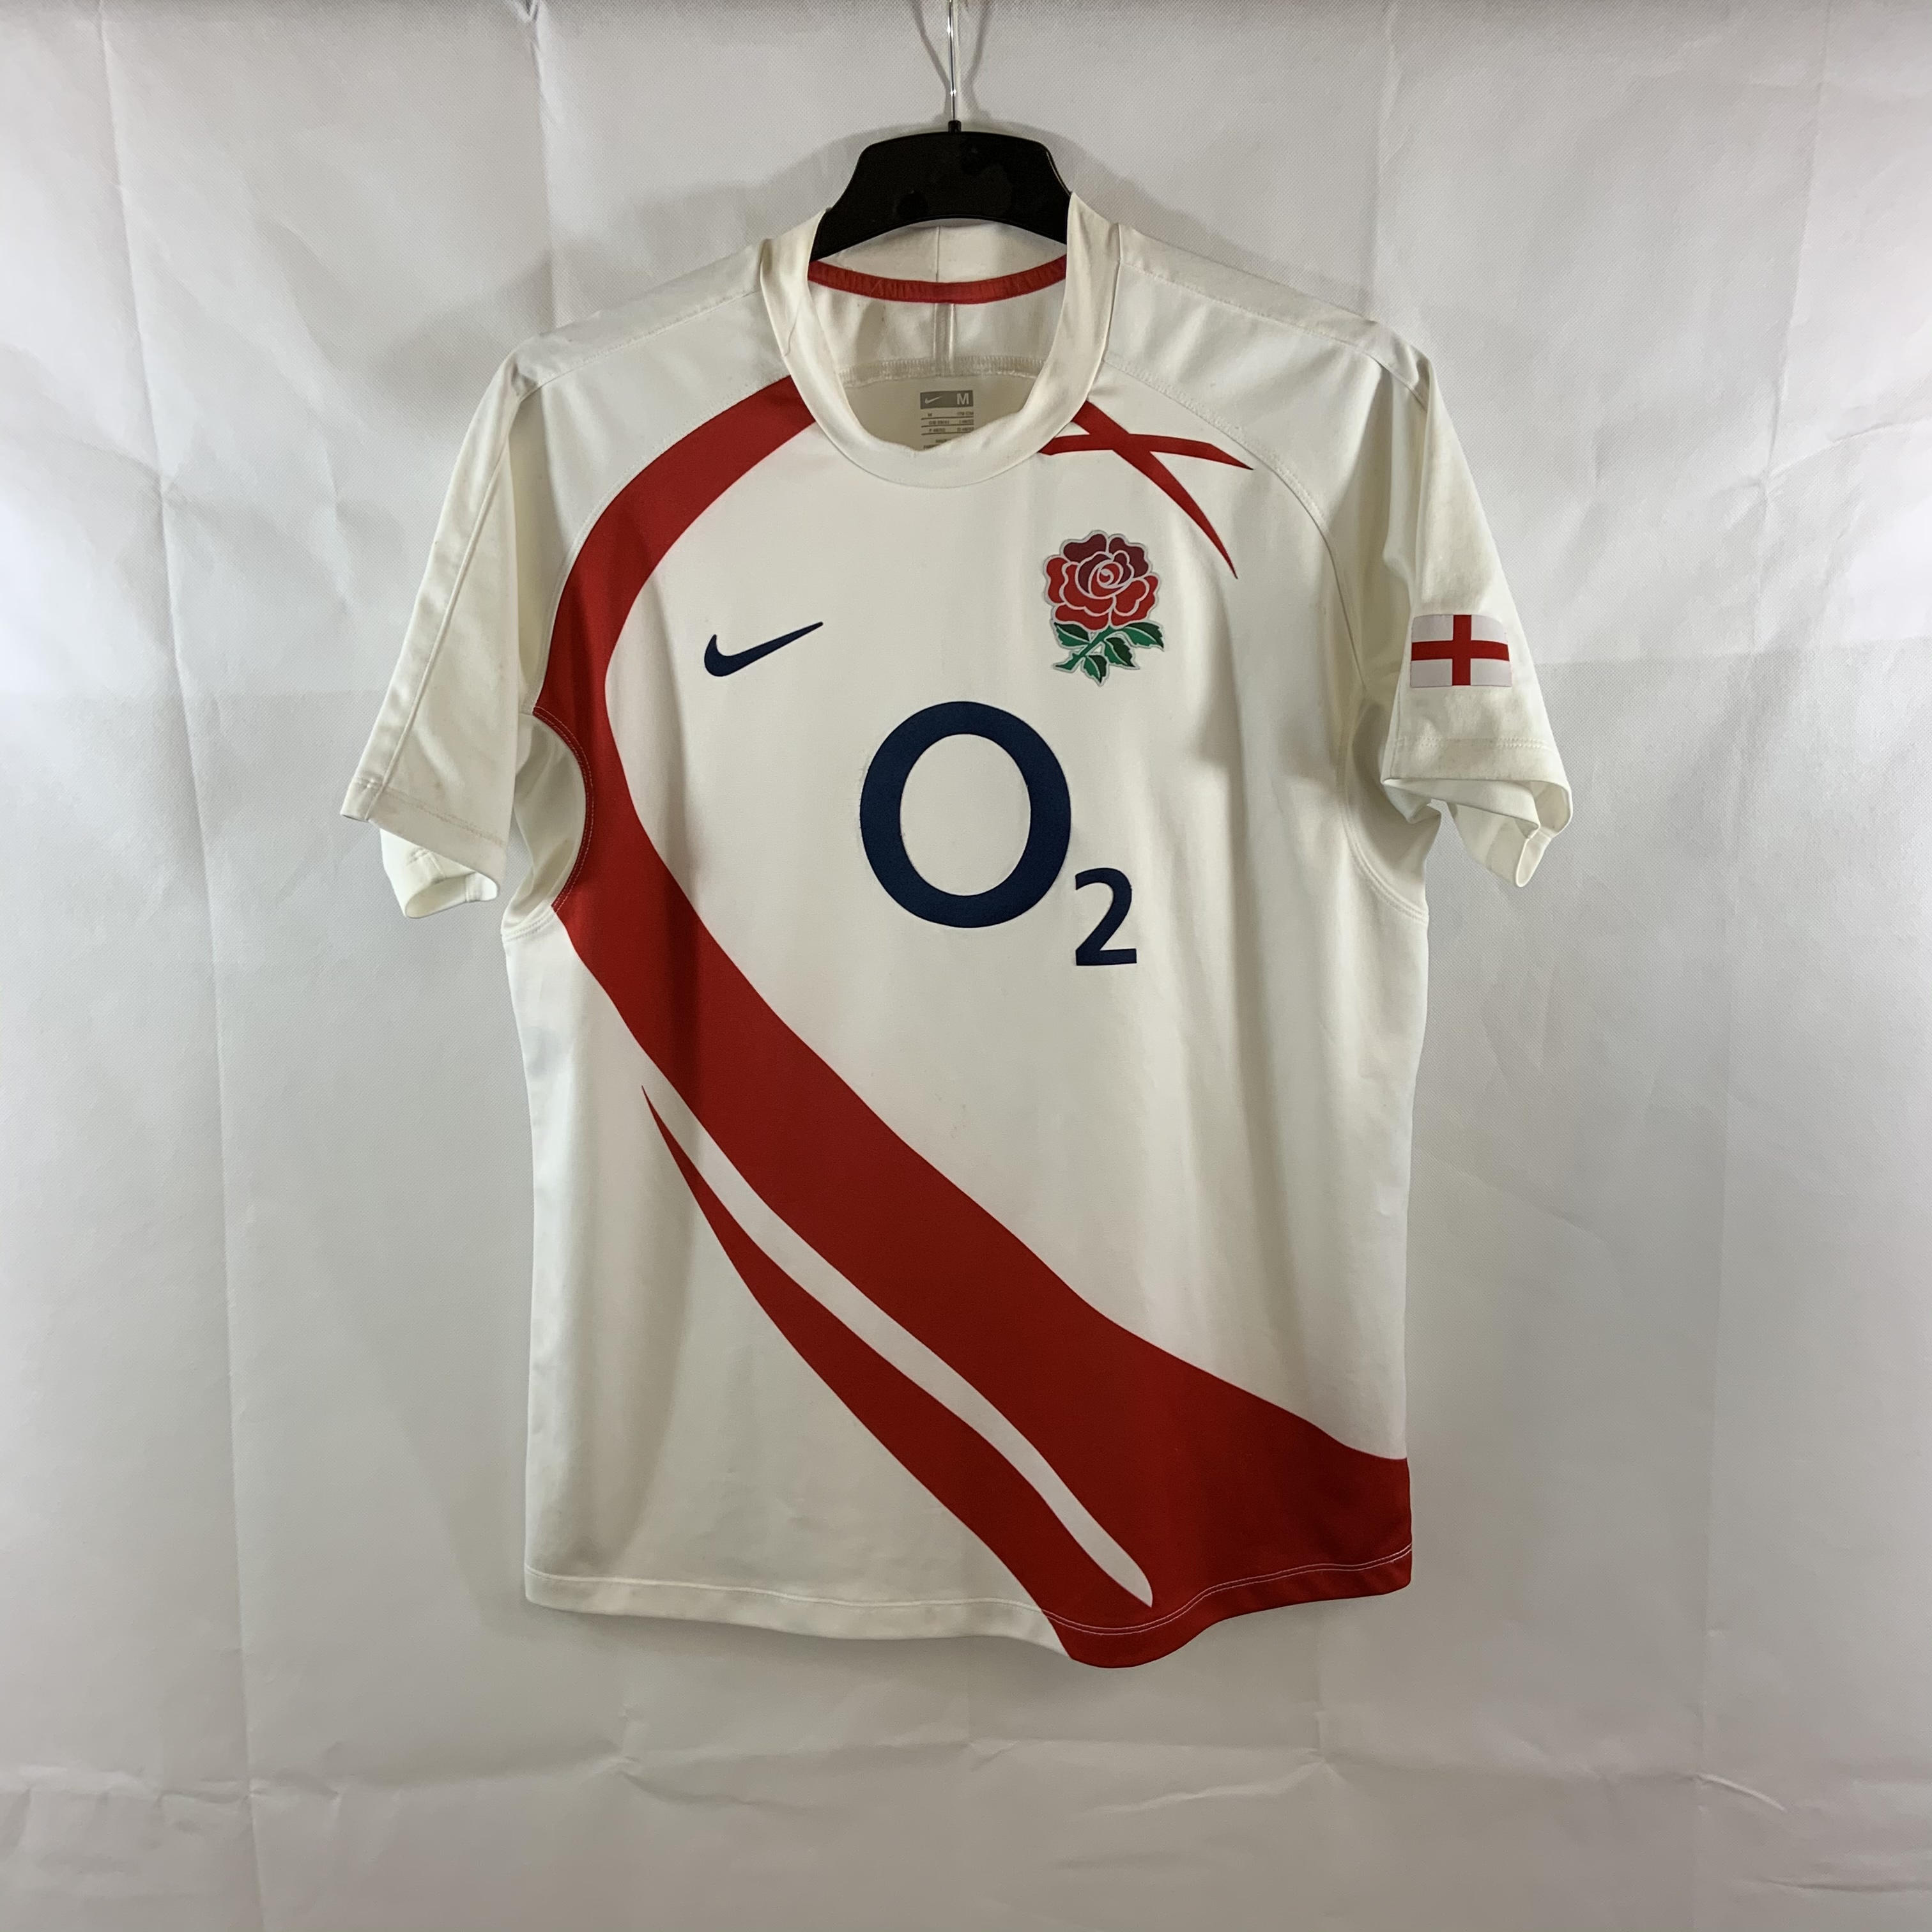 Home Rugby Shirt 2007/09 Adults Medium Nike – Football Shirts